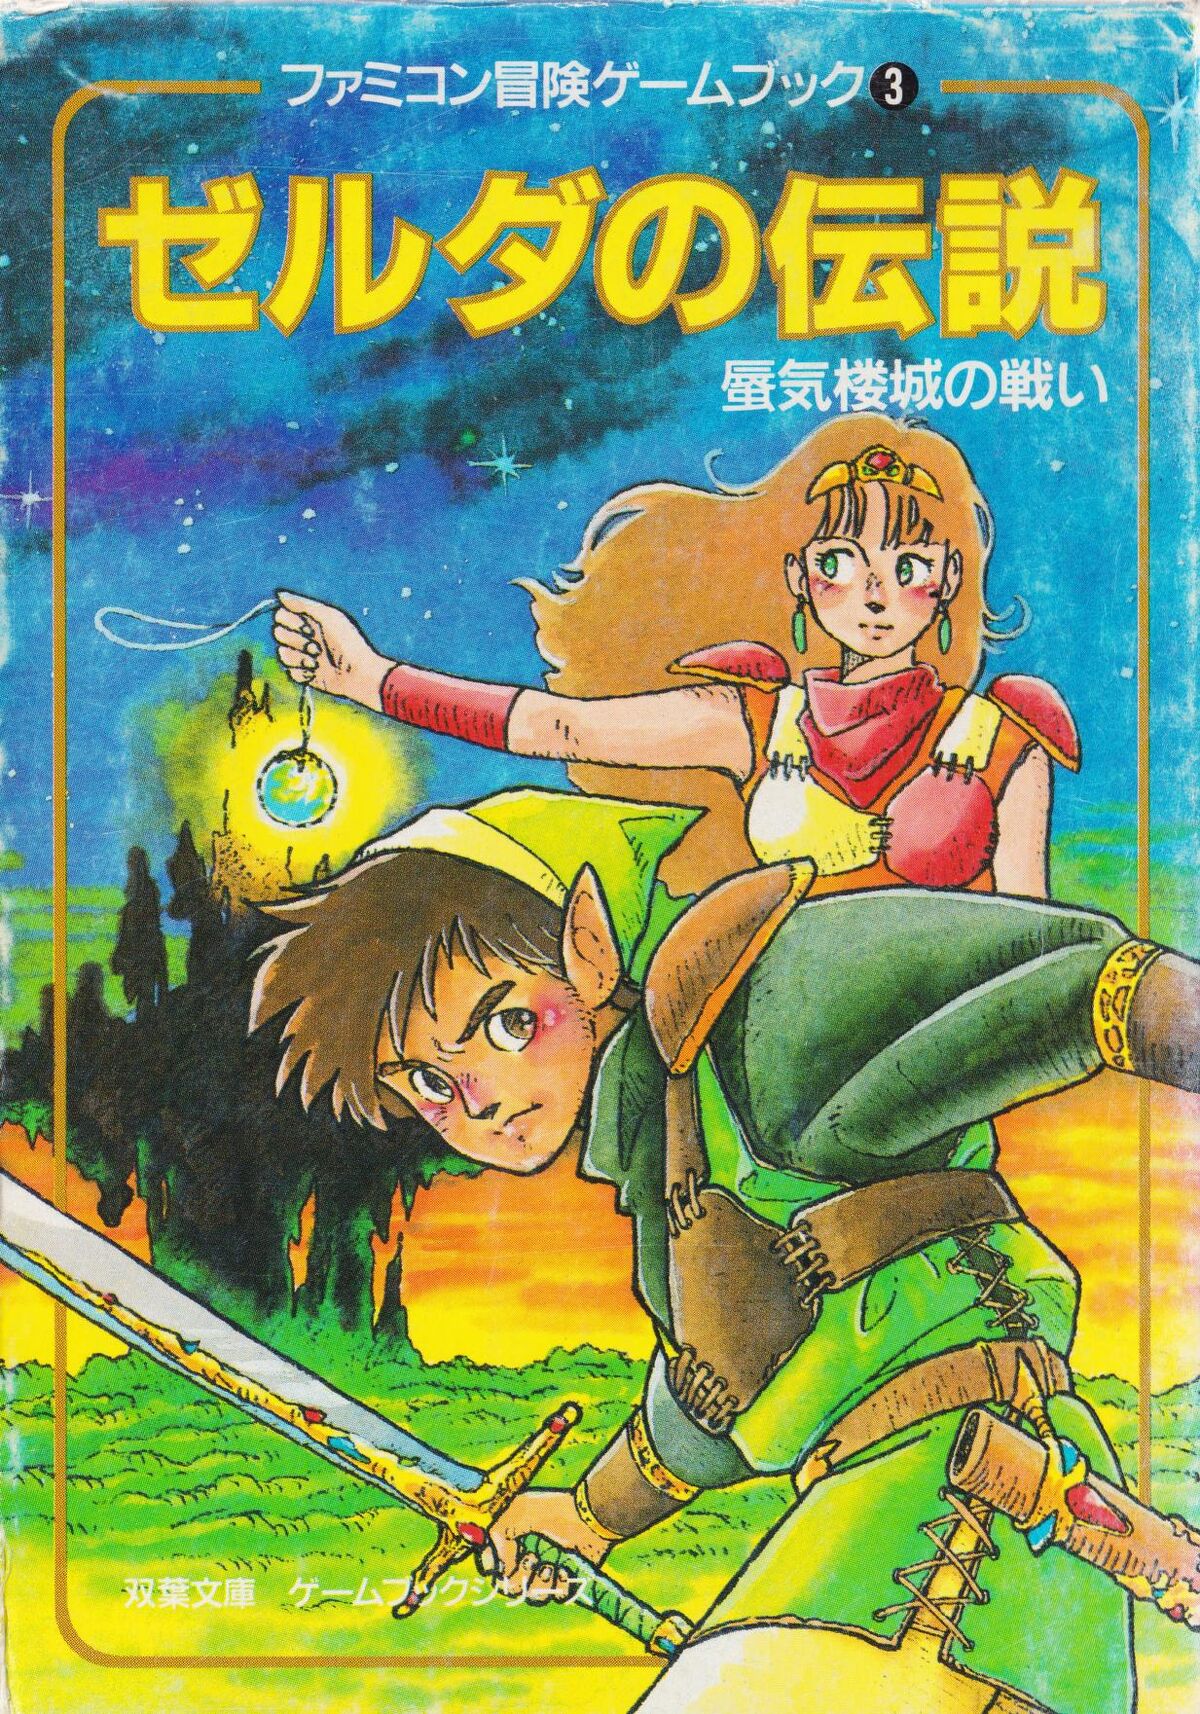 The Legend of Zelda Manga Box Set - Zelda Wiki